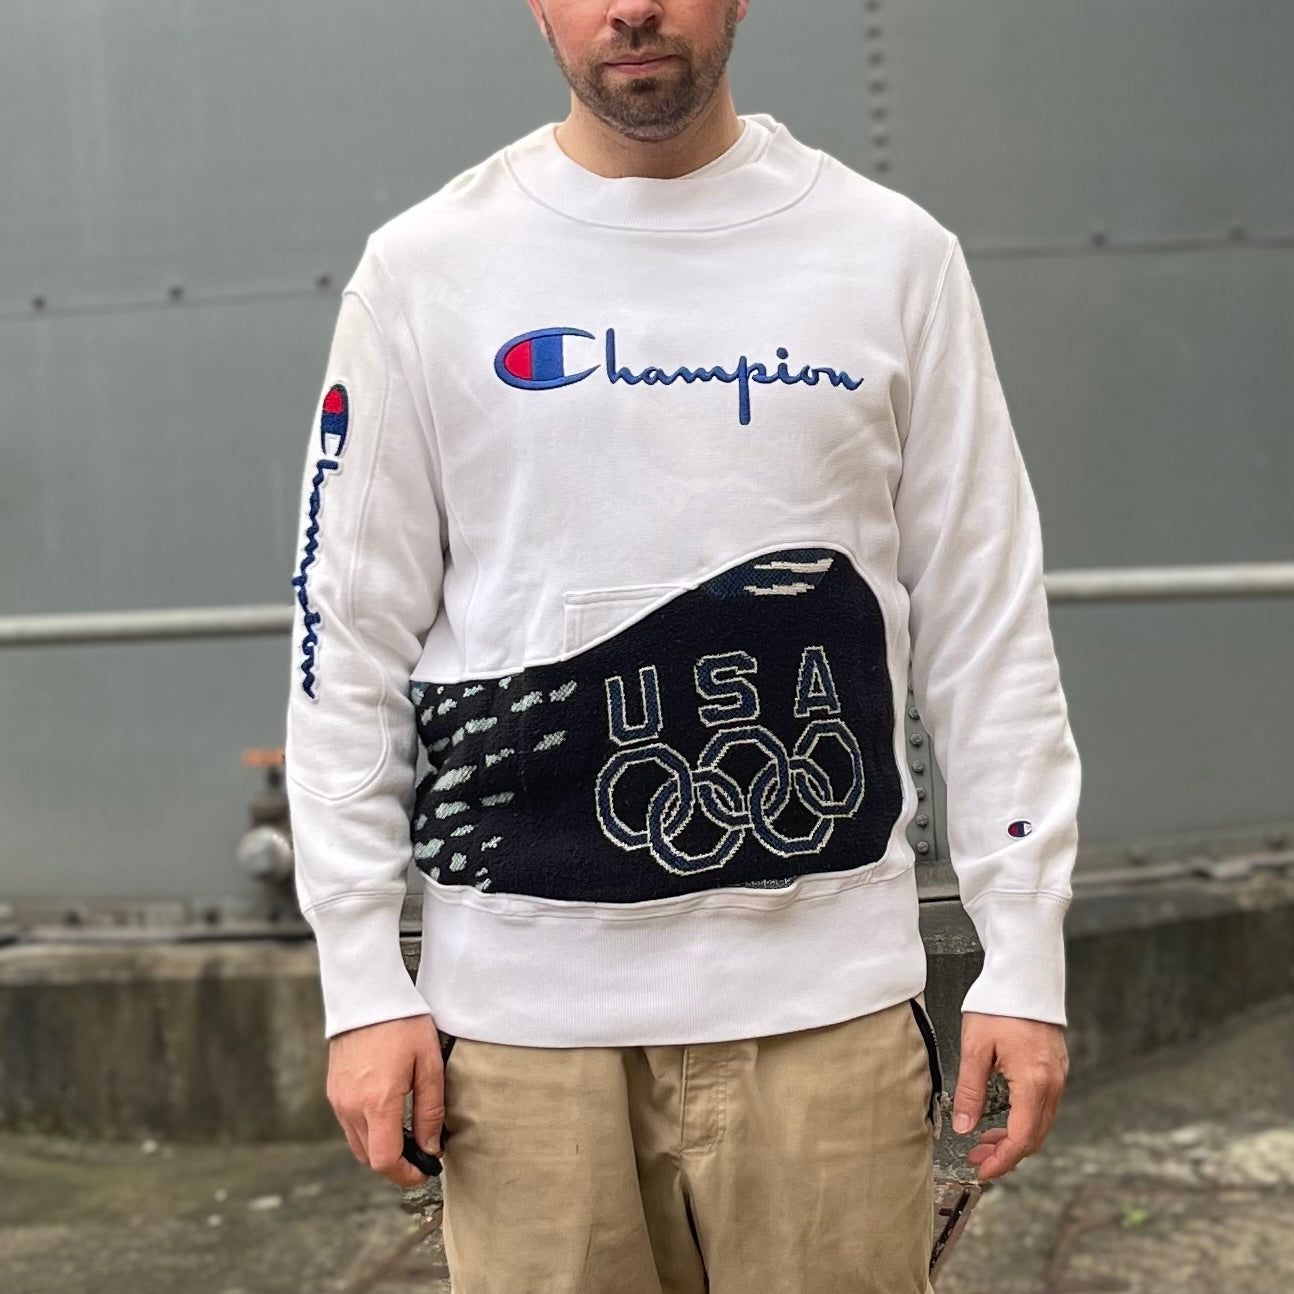 Champion X USA Soccer Reworked Sweatshirt - Medium